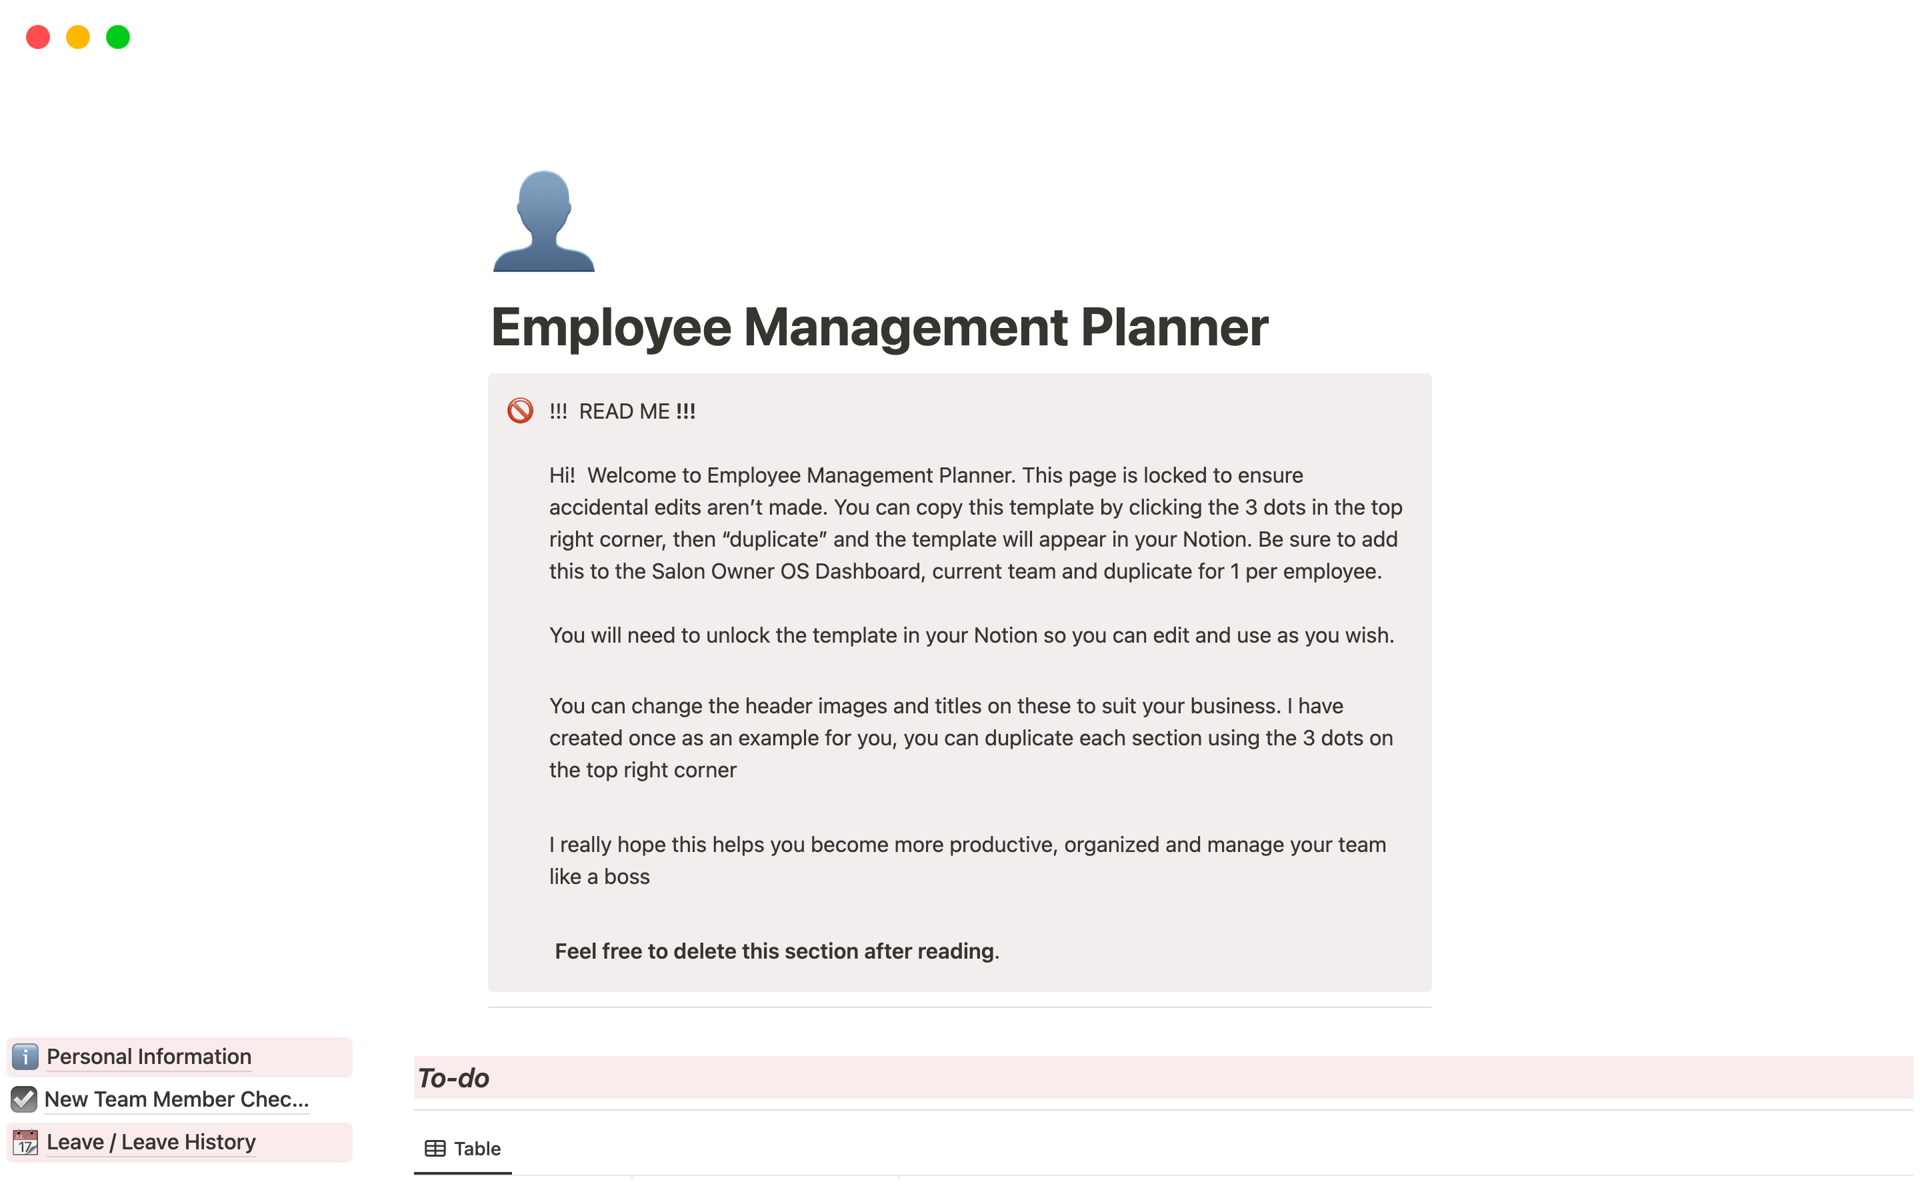 Vista previa de una plantilla para Employee Management Planner